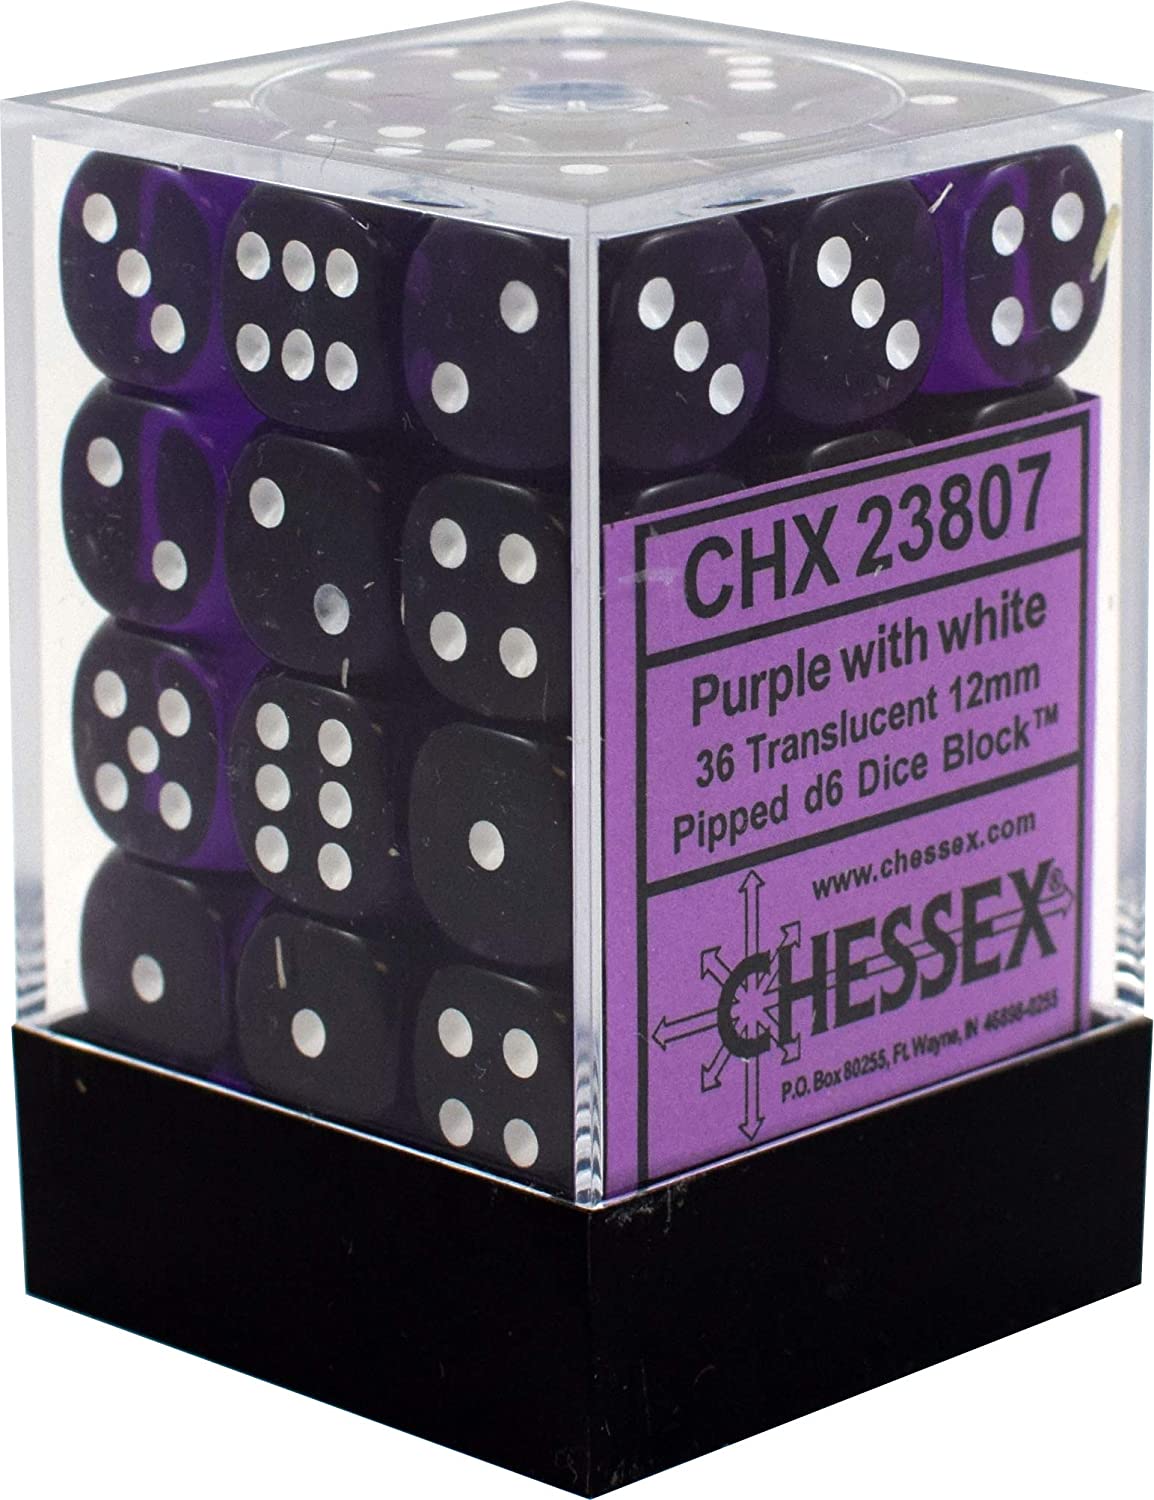 Chessex Dice: D6 Block 12mm - Translucent - Purple with White (CHX 23807) - Gamescape